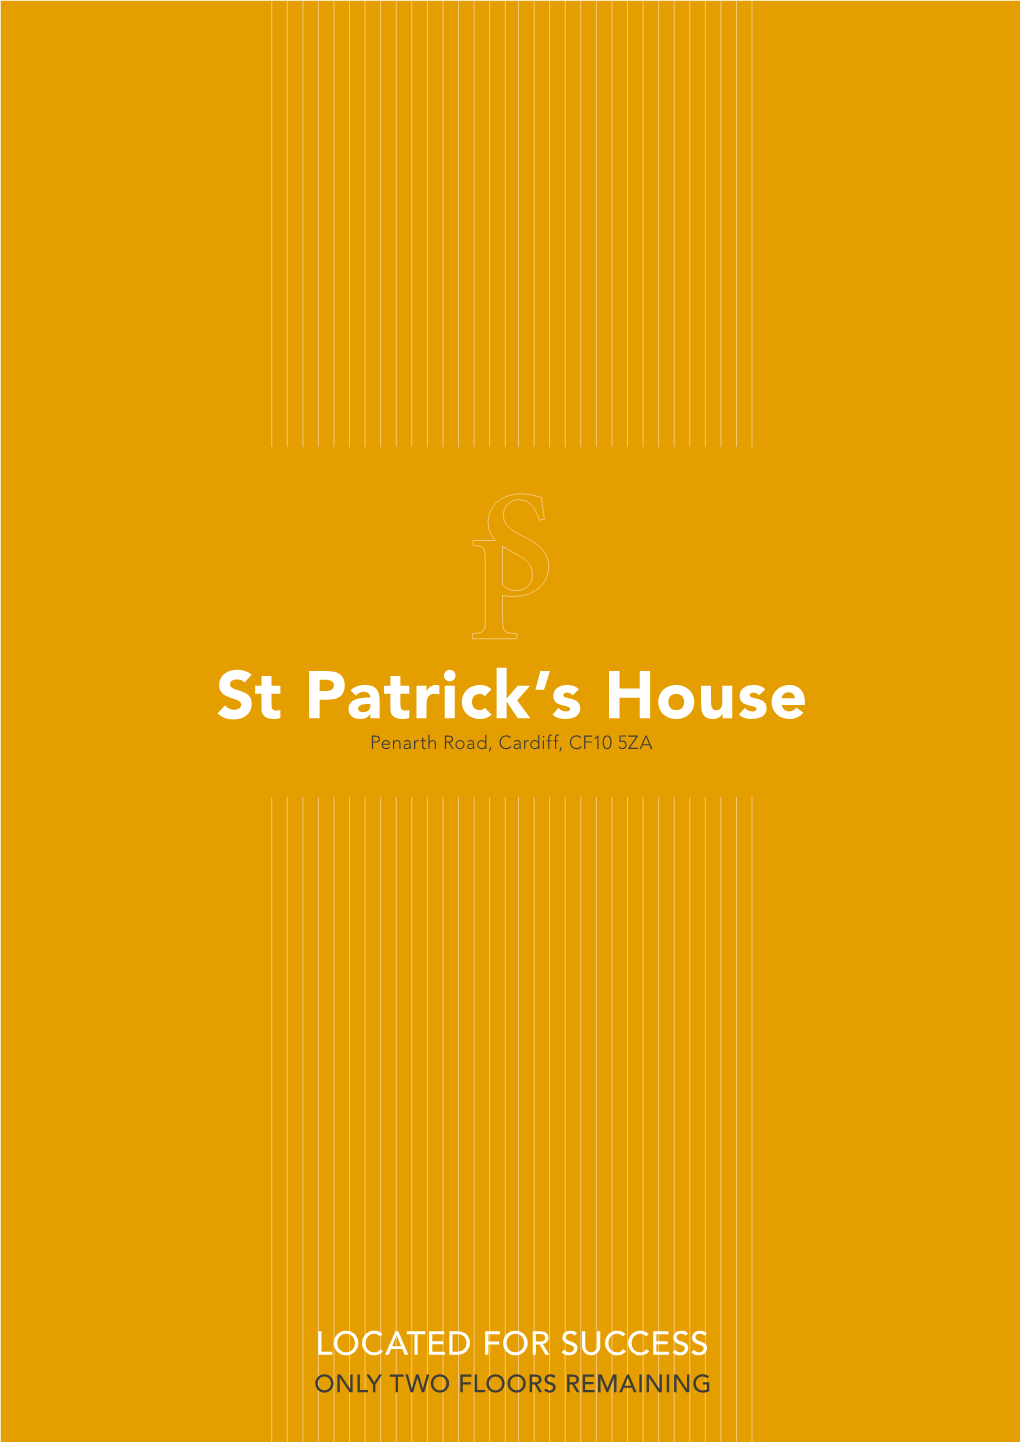 St Patrick's House